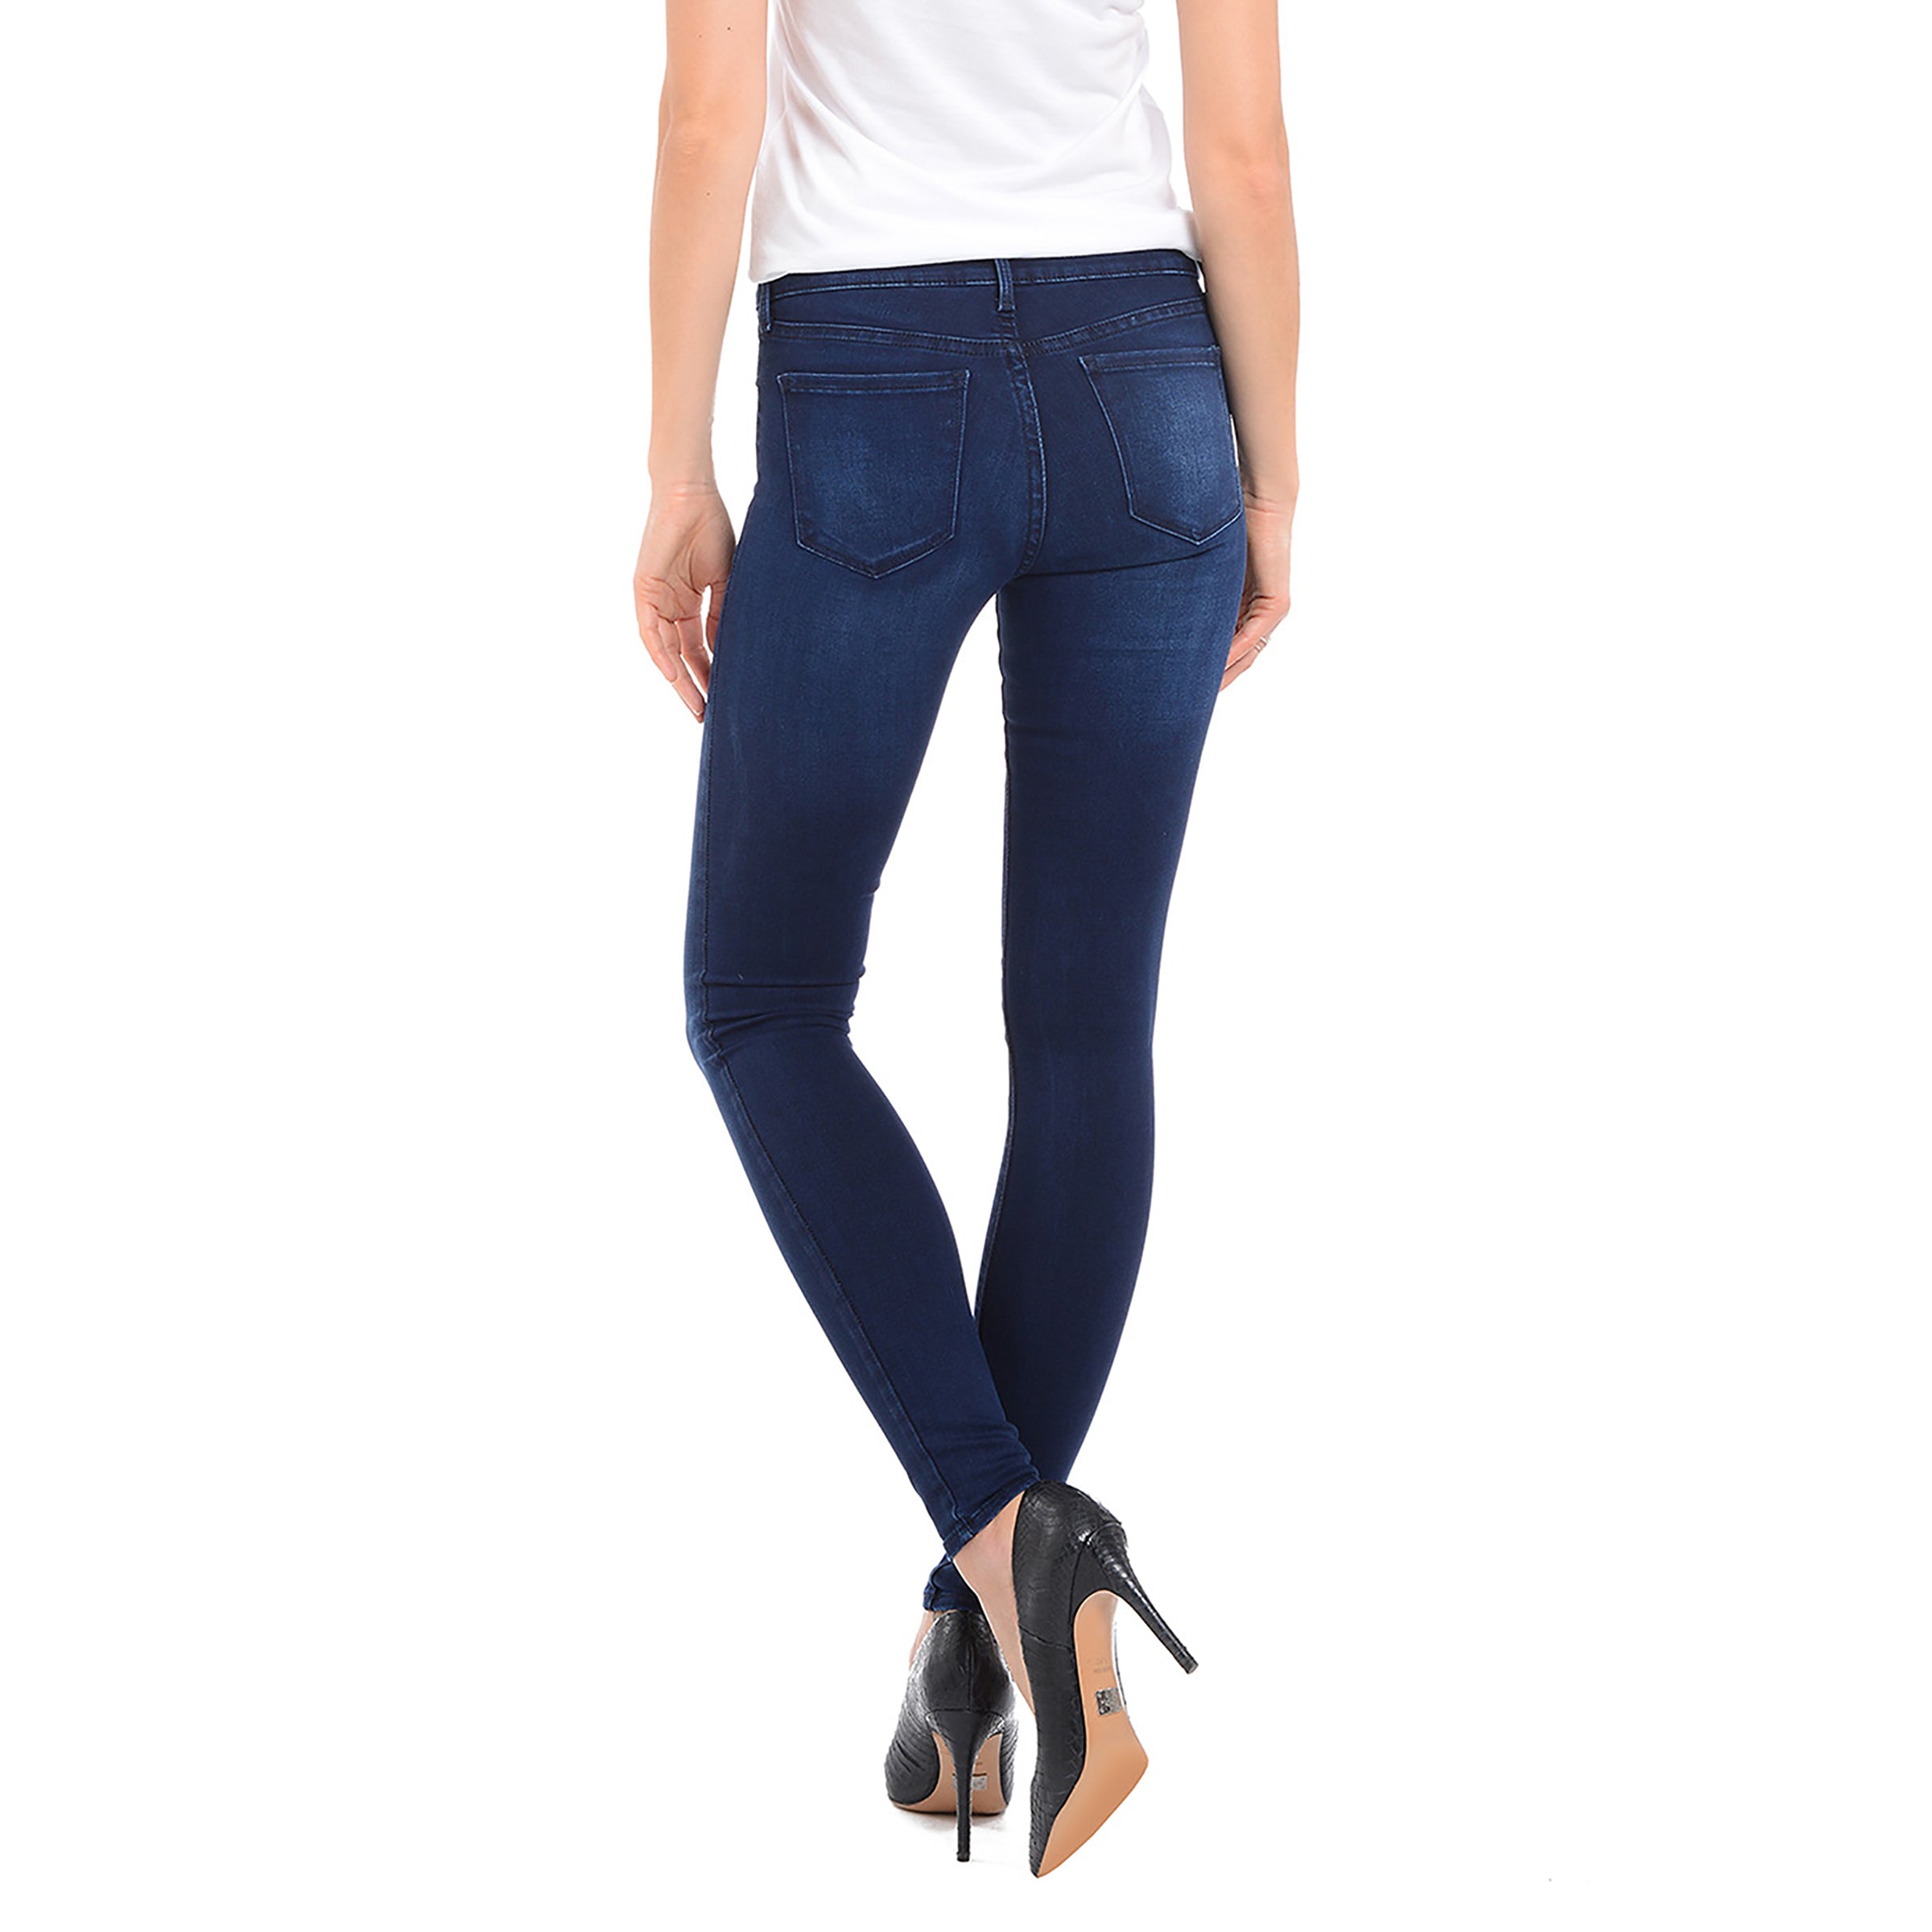 Women wearing Azul oscuro/medio Mid Rise Skinny Ann Jeans